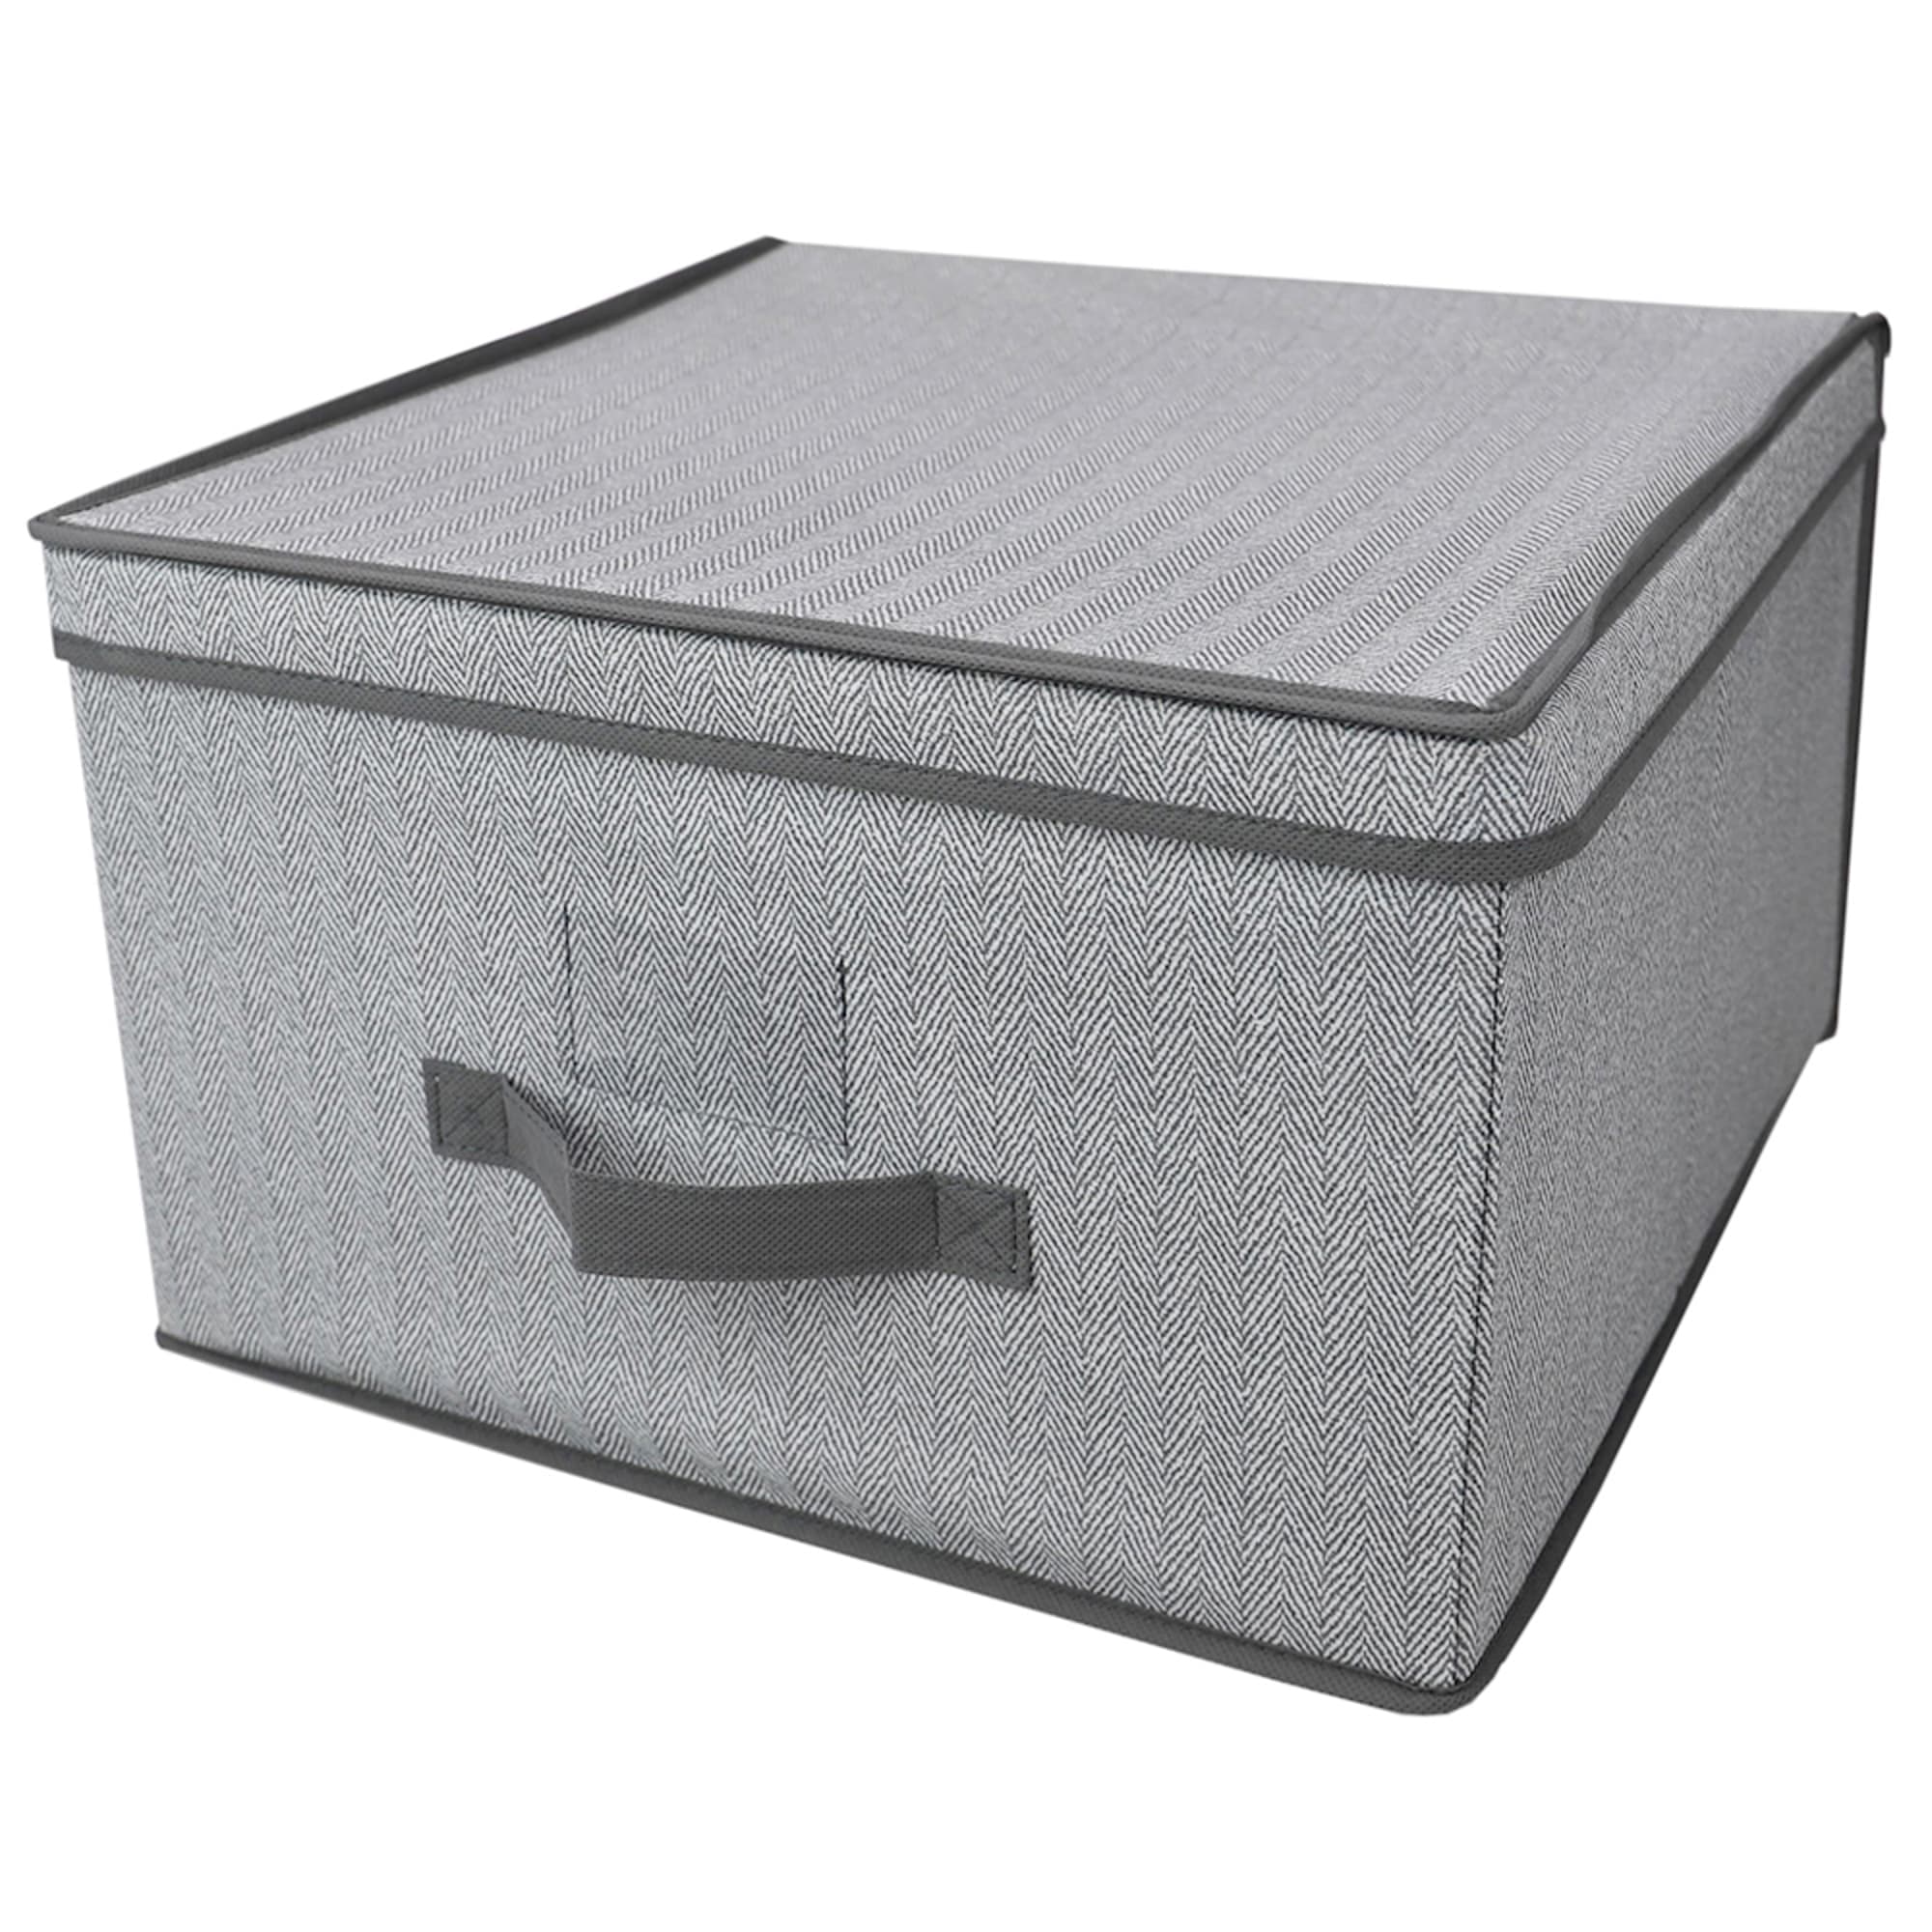 Home Basics Herringbone Jumbo Non-woven Storage Box with Label Window, Grey $7.00 EACH, CASE PACK OF 12